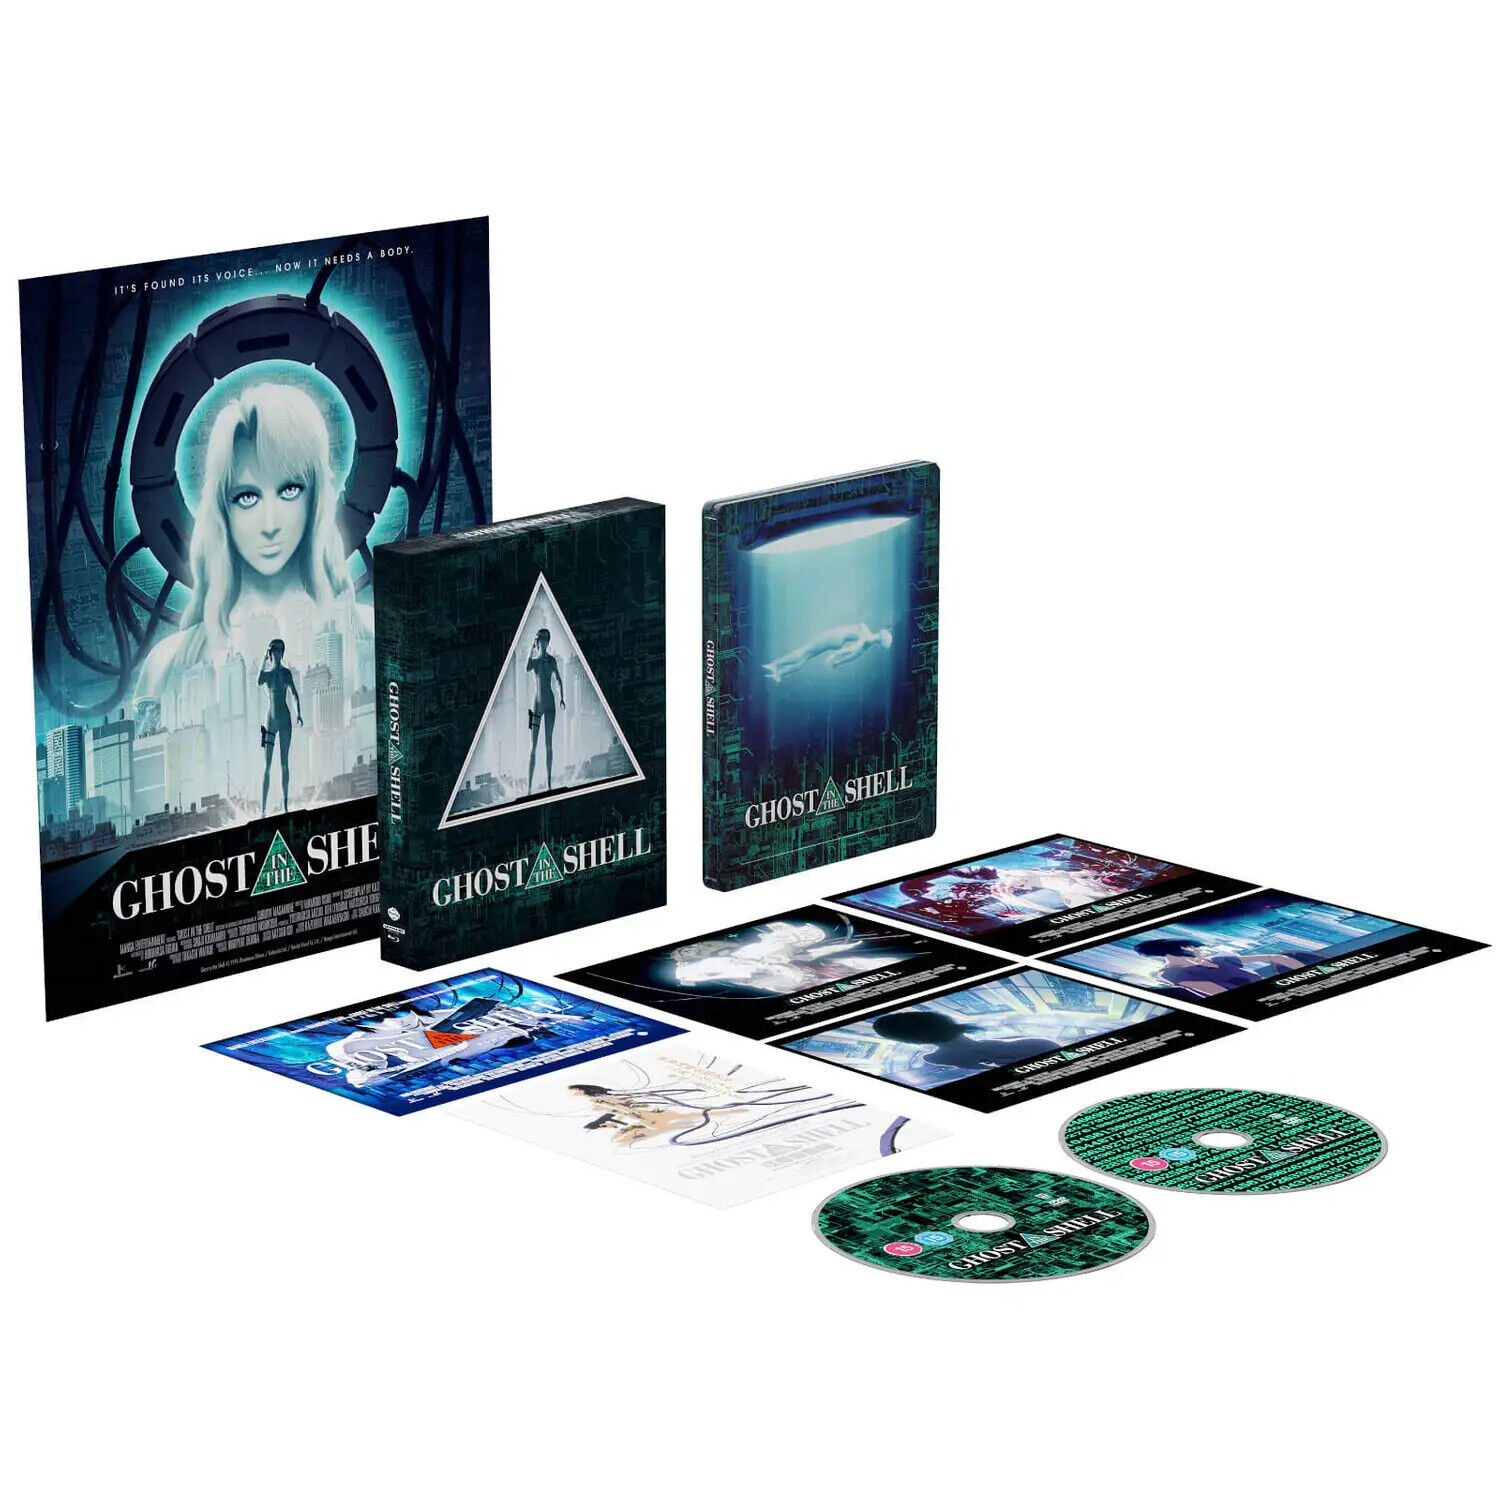 Ghost In The Shell - Ltd Edition Steelbook (4K Ultra HD + Blu-ray) WWS Ograniczona SPRZEDAŻ, popularna